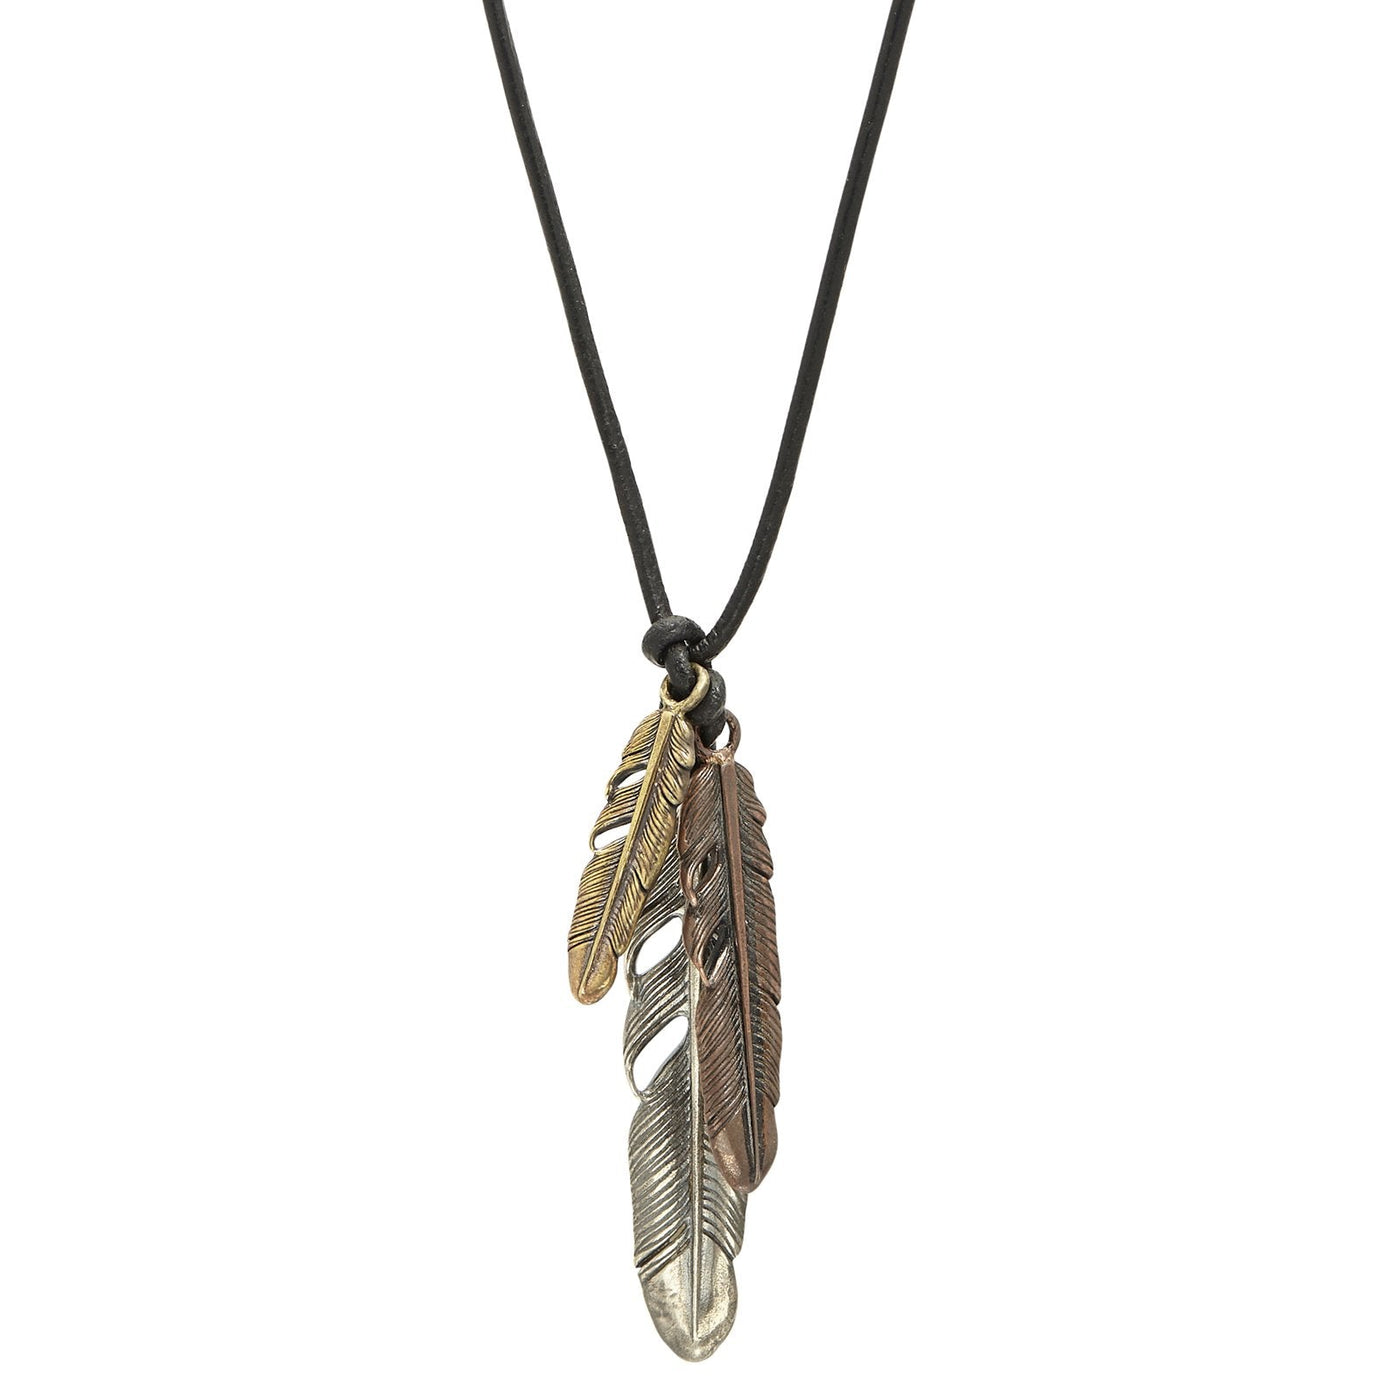 John Varvatos Silver/Brass/Bronze Leaf Pendant Necklace on Leather Cord